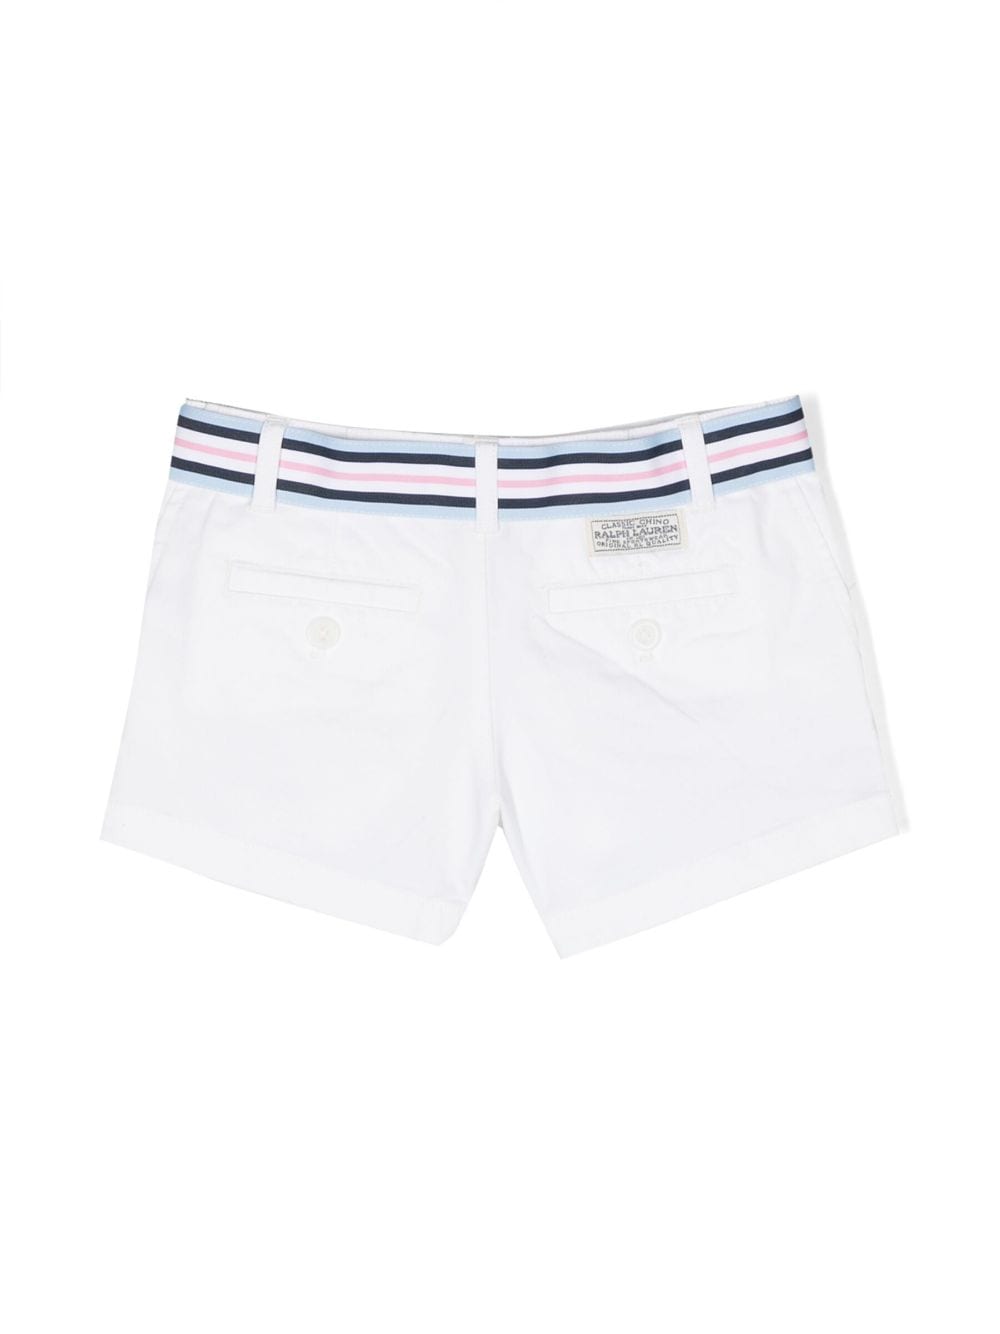 White Bermuda shorts for girls with logo